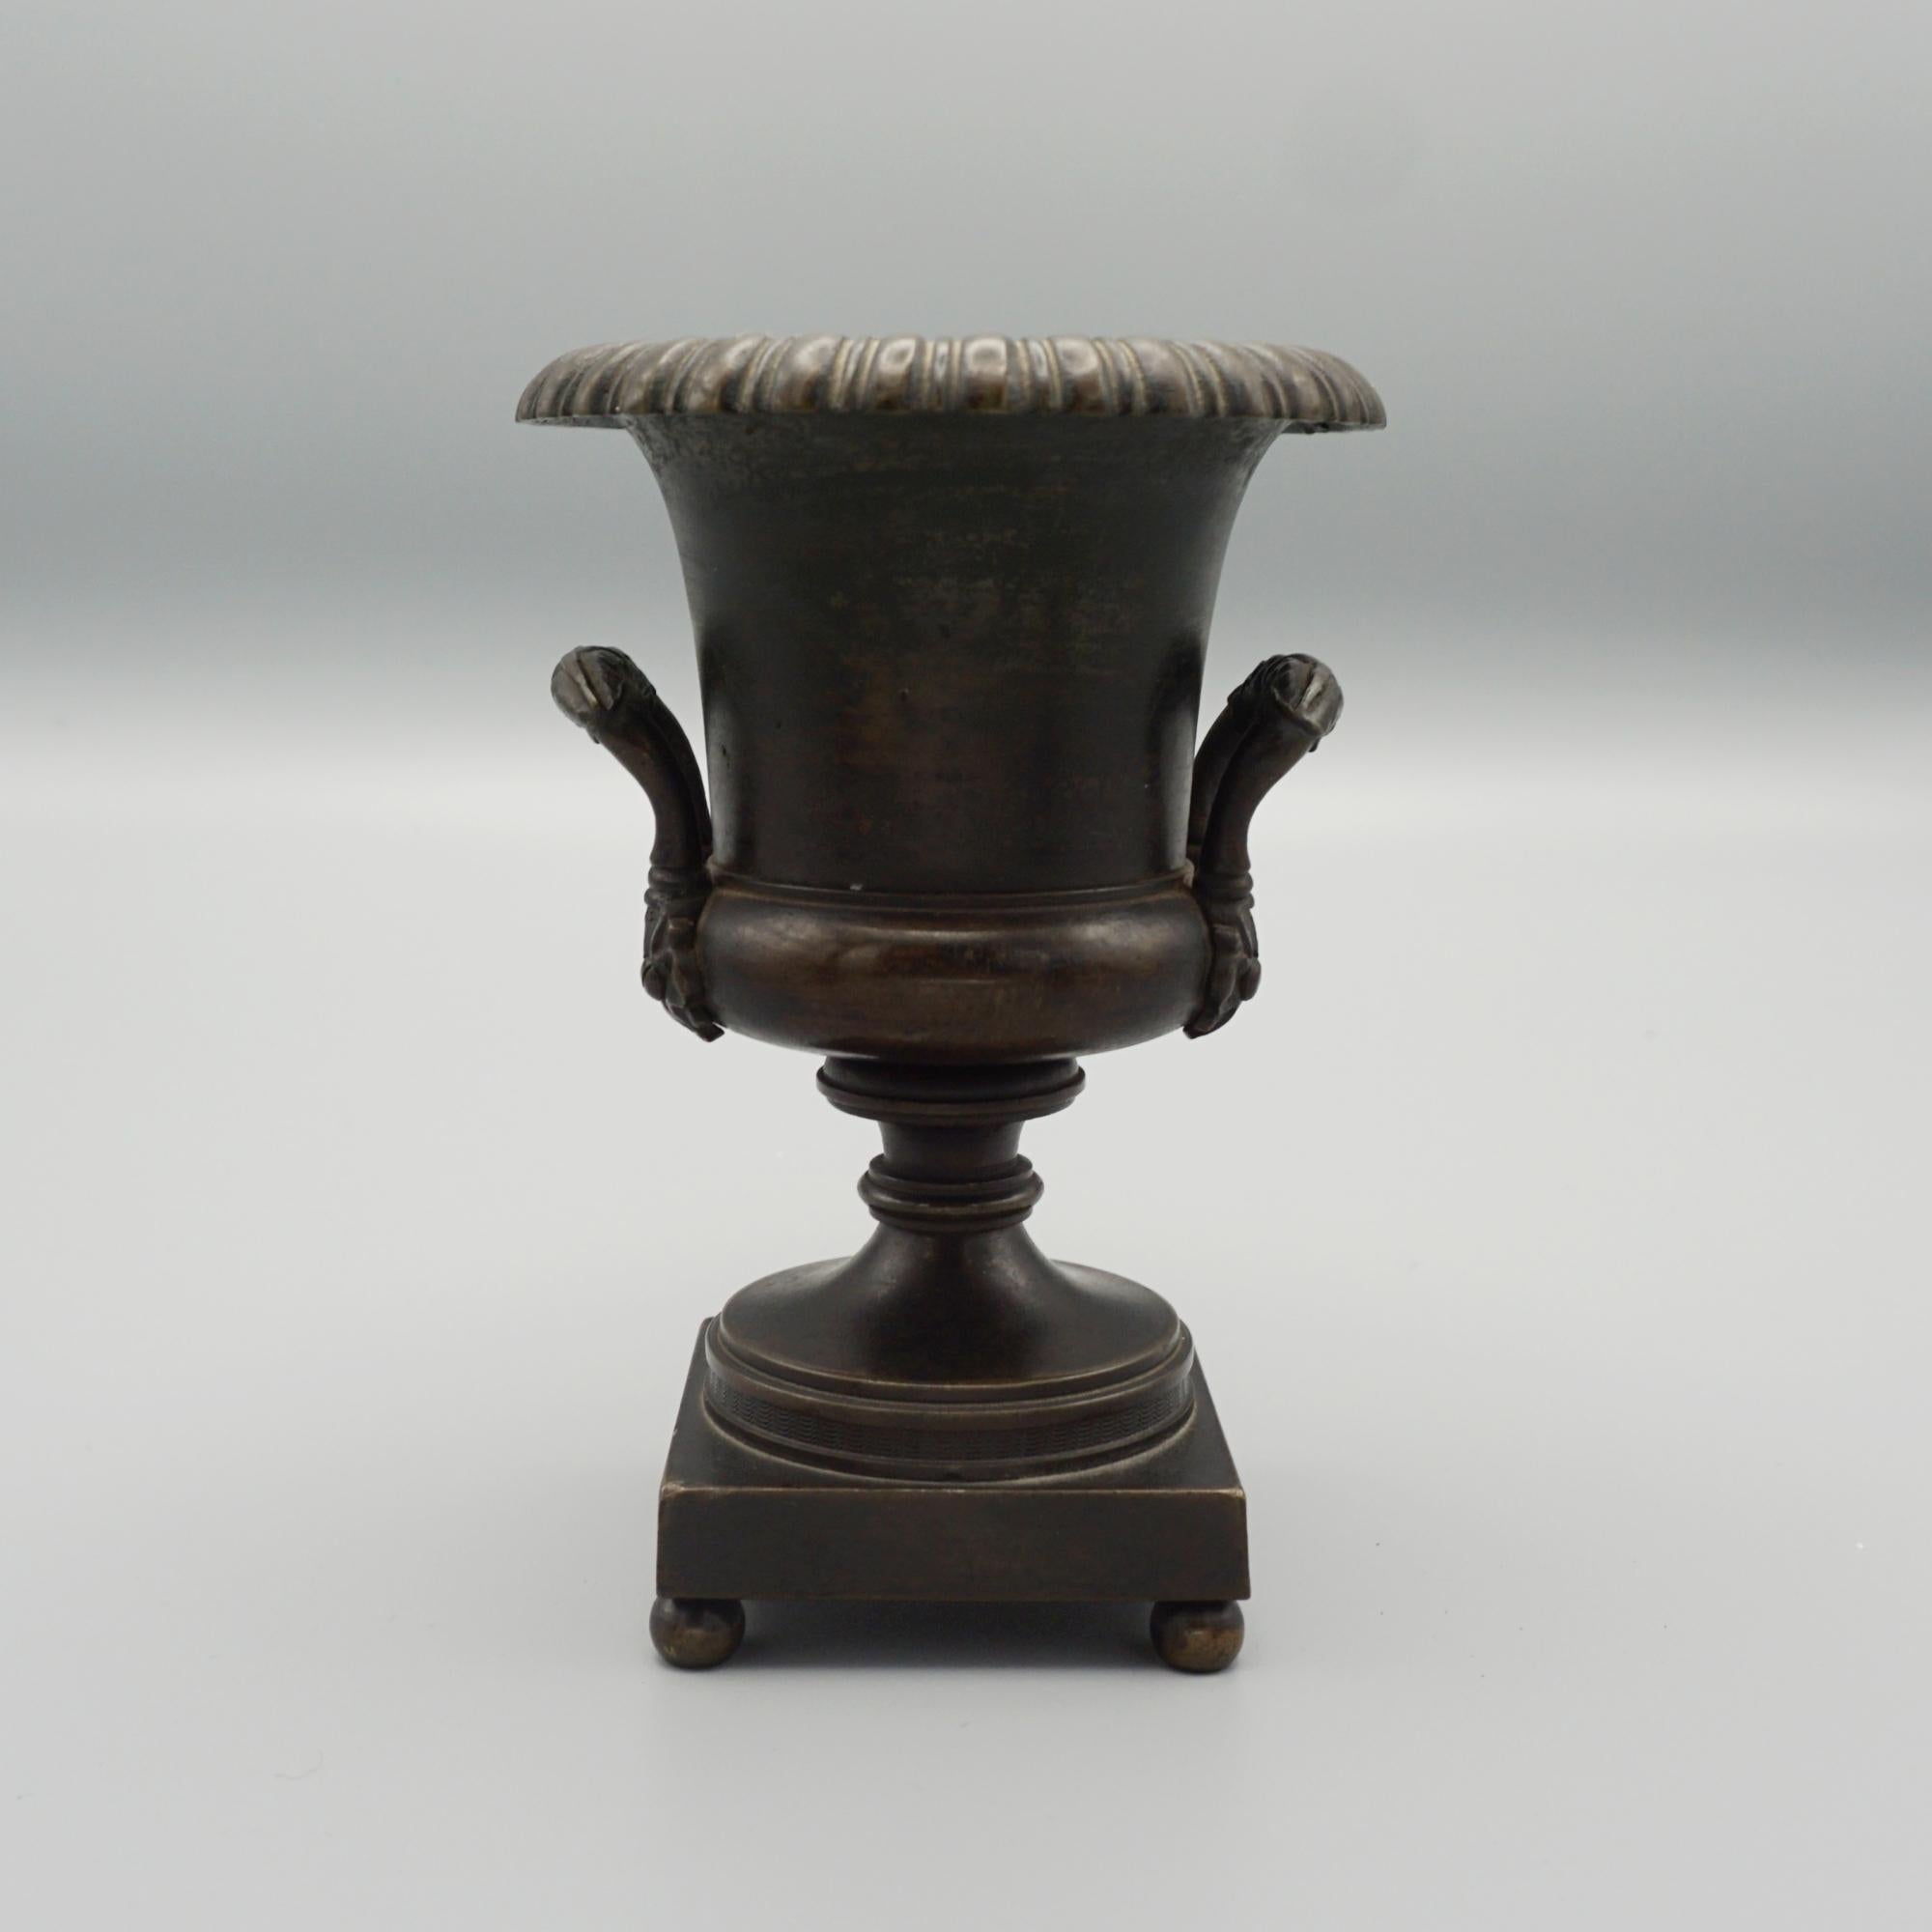 A Regency bronze incense burner in the form of an urn. 

Dimensions: H 12.5cm W 9cm D 9cm 

Origin: French

Date: Circa 1820